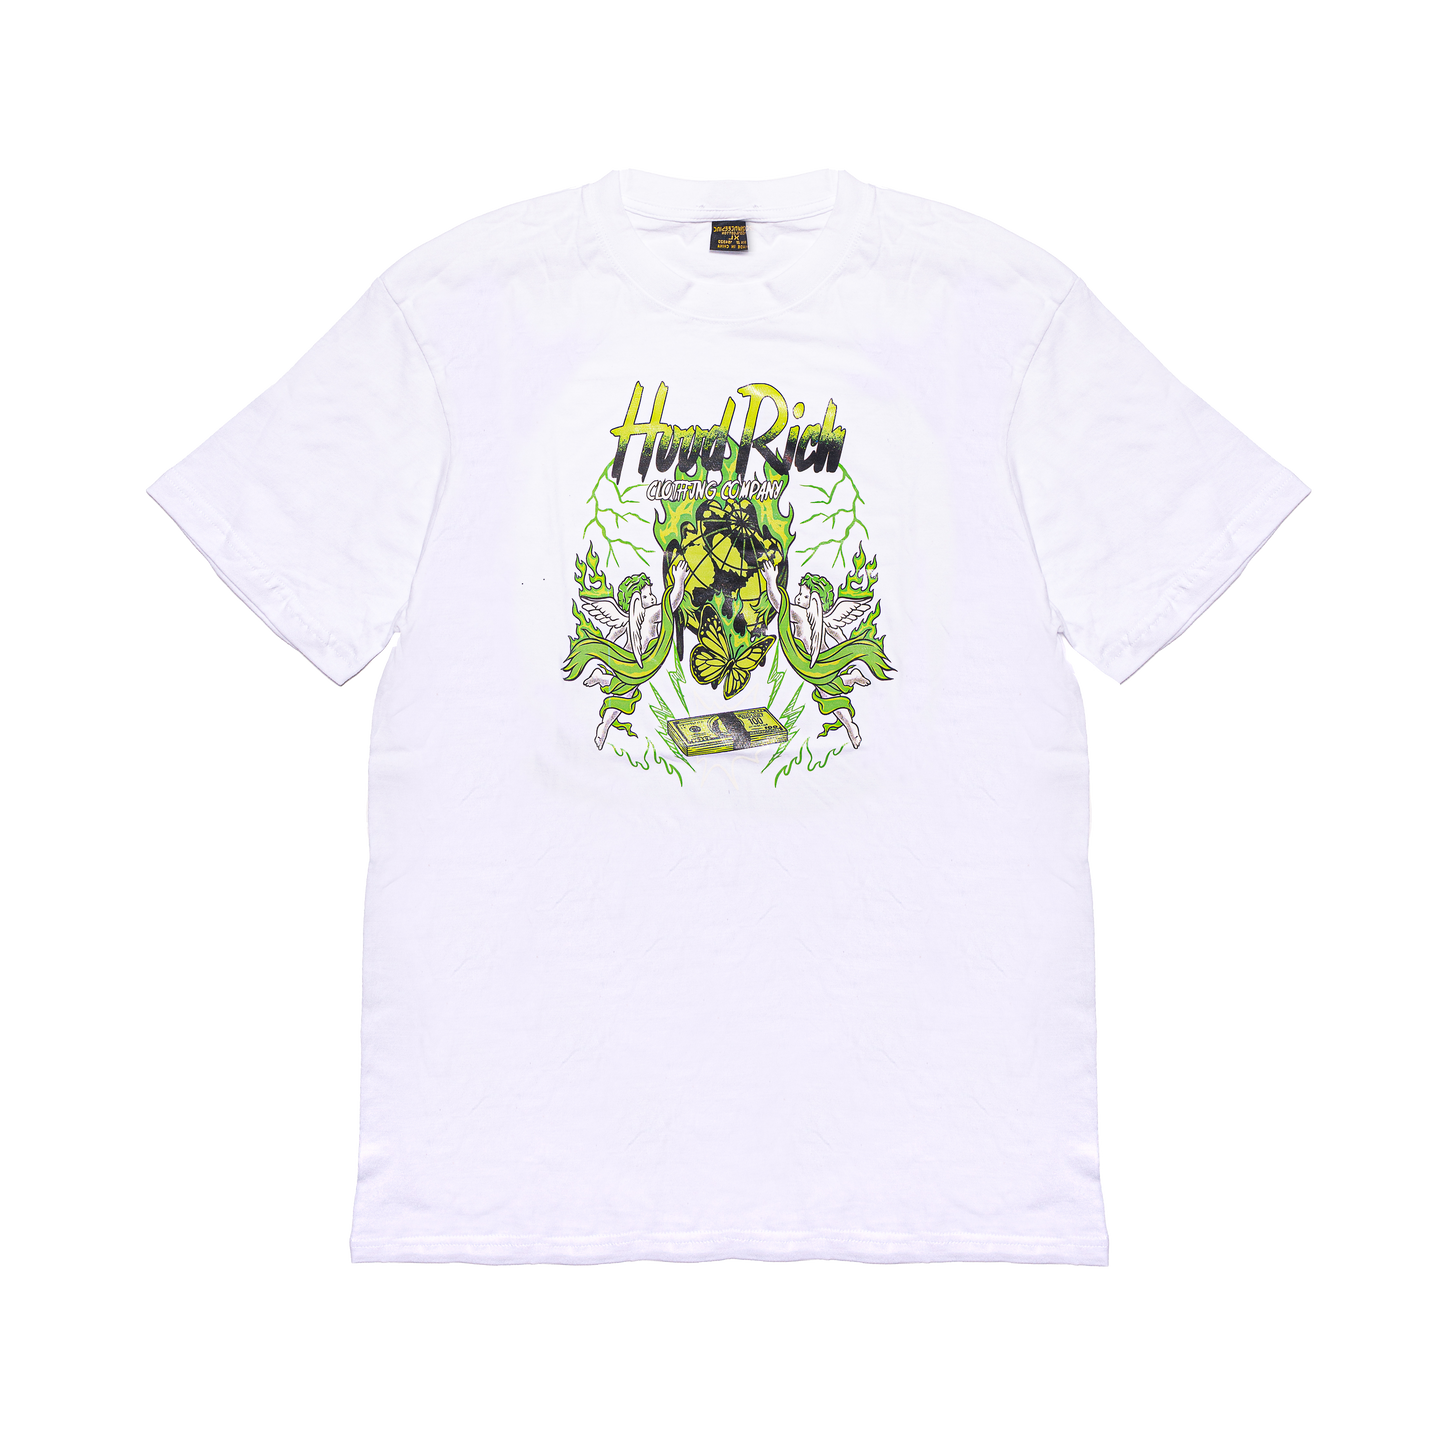 White/Green Dark Blessed N Rich T-Shirt